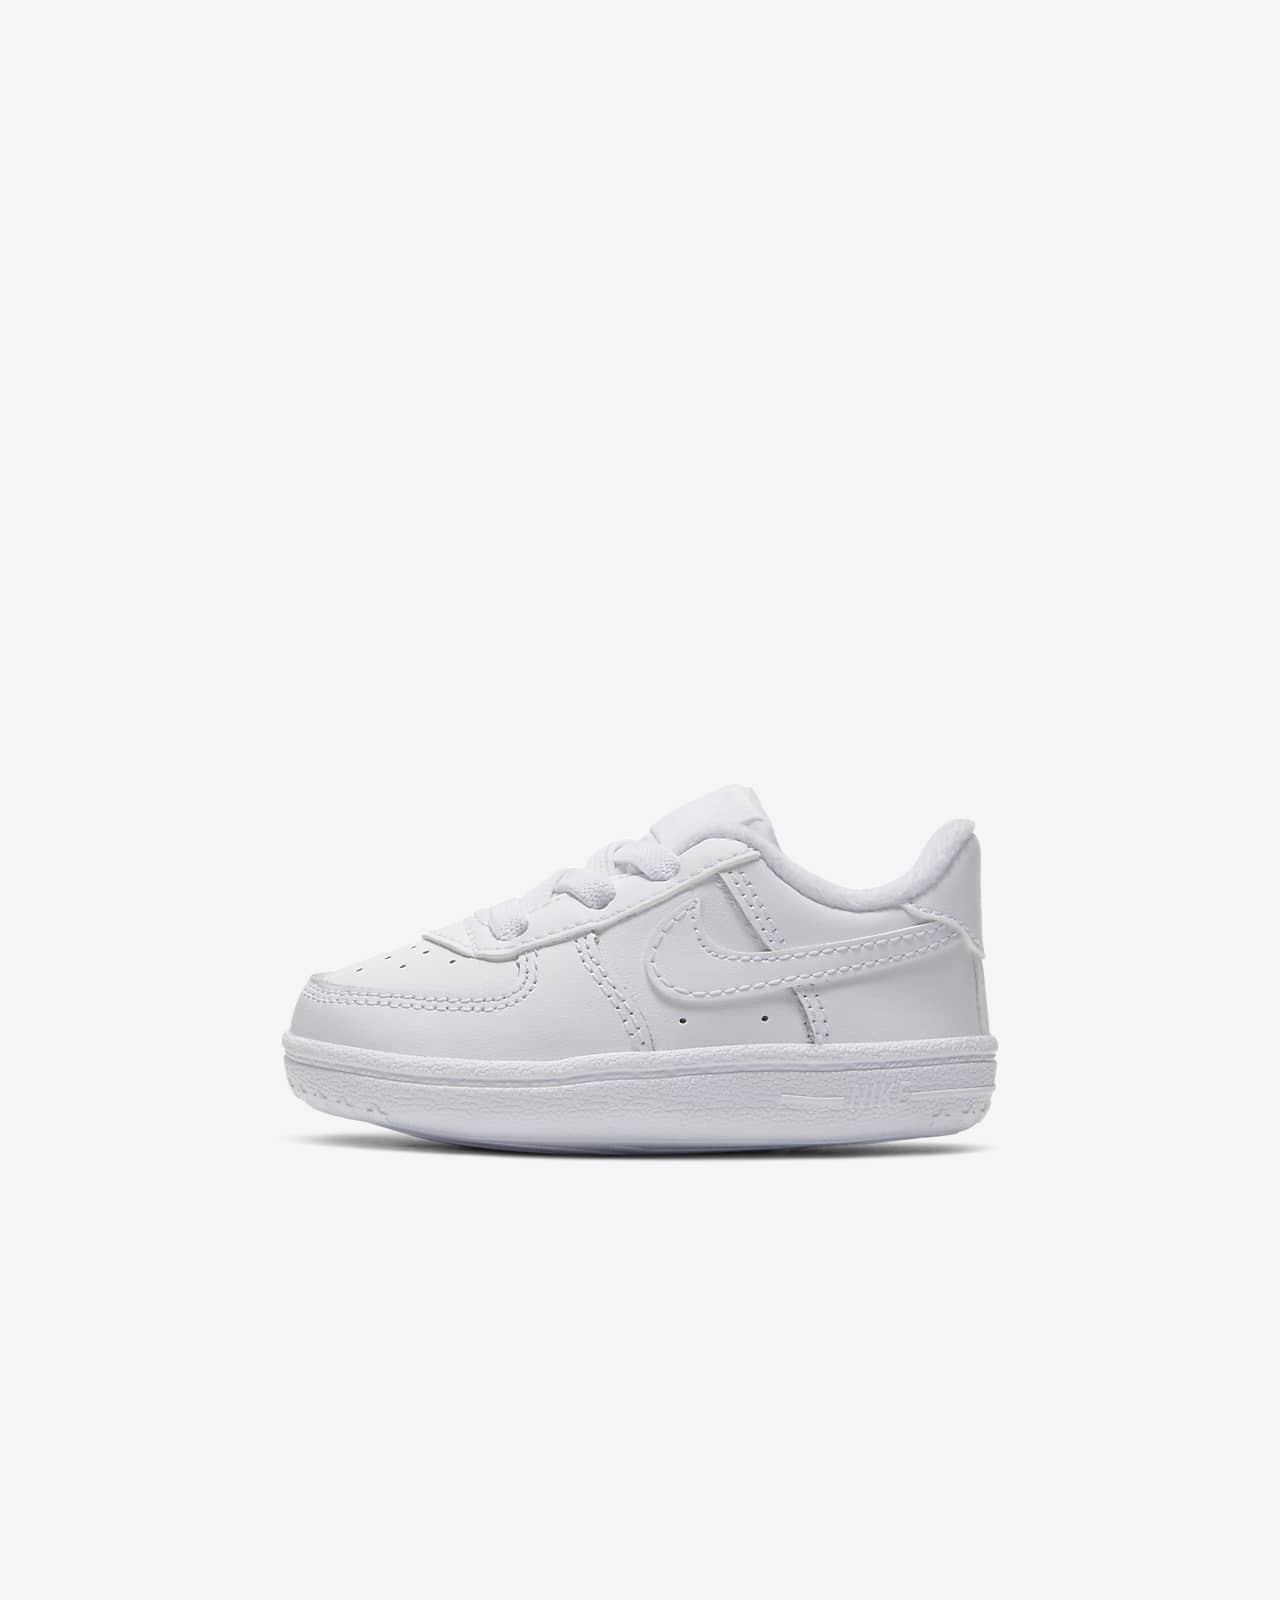 Nike Force 1 嬰兒鞋款